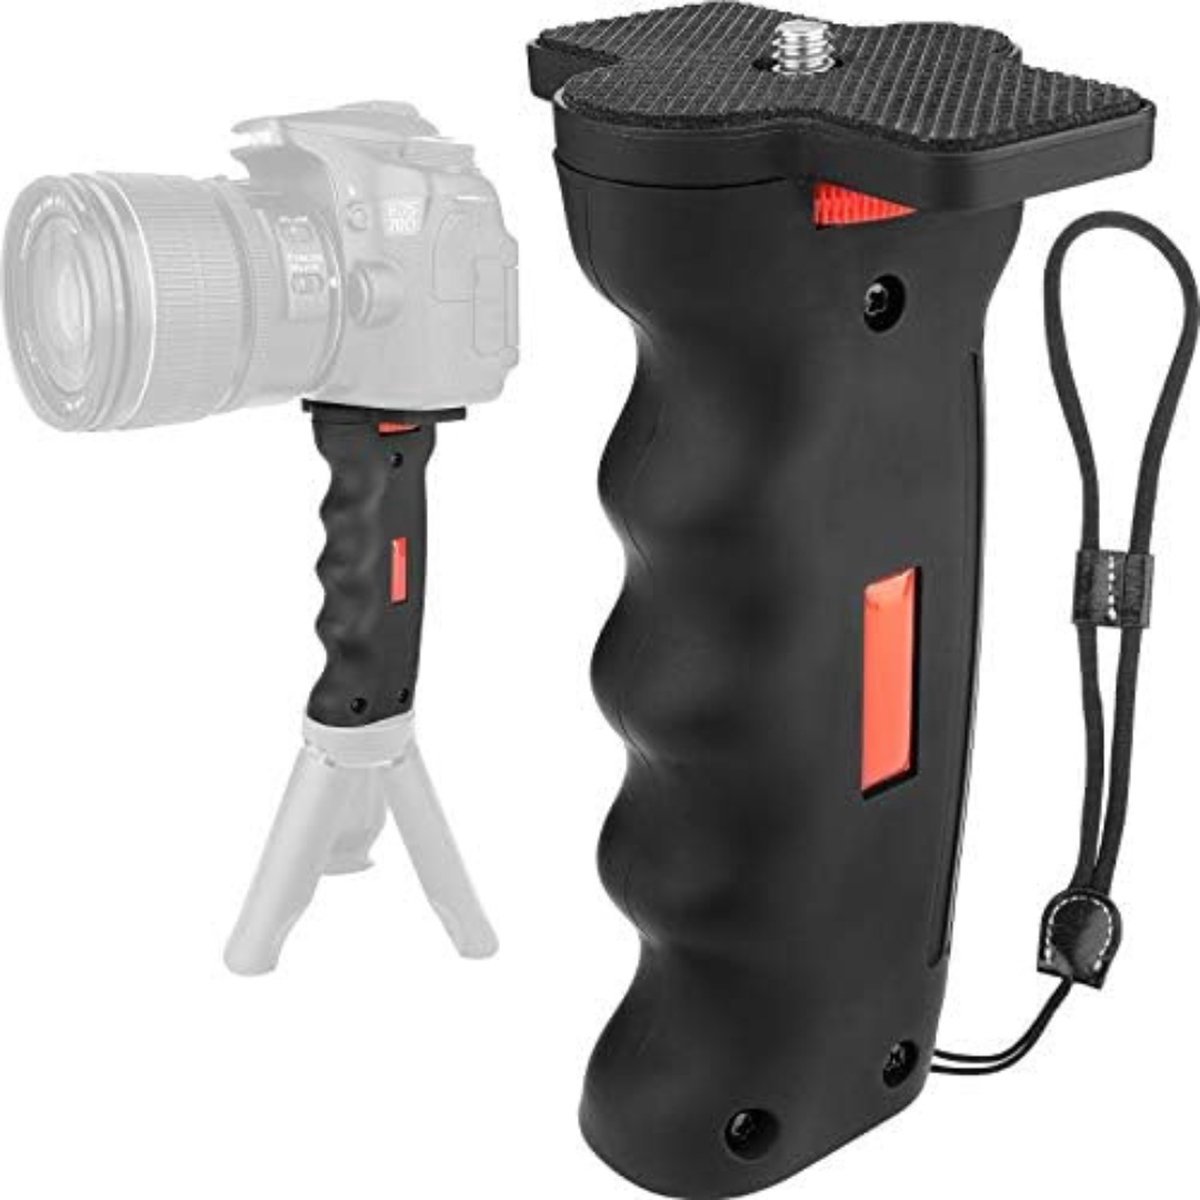 Camera Stabilisator - Camera Stabilizer